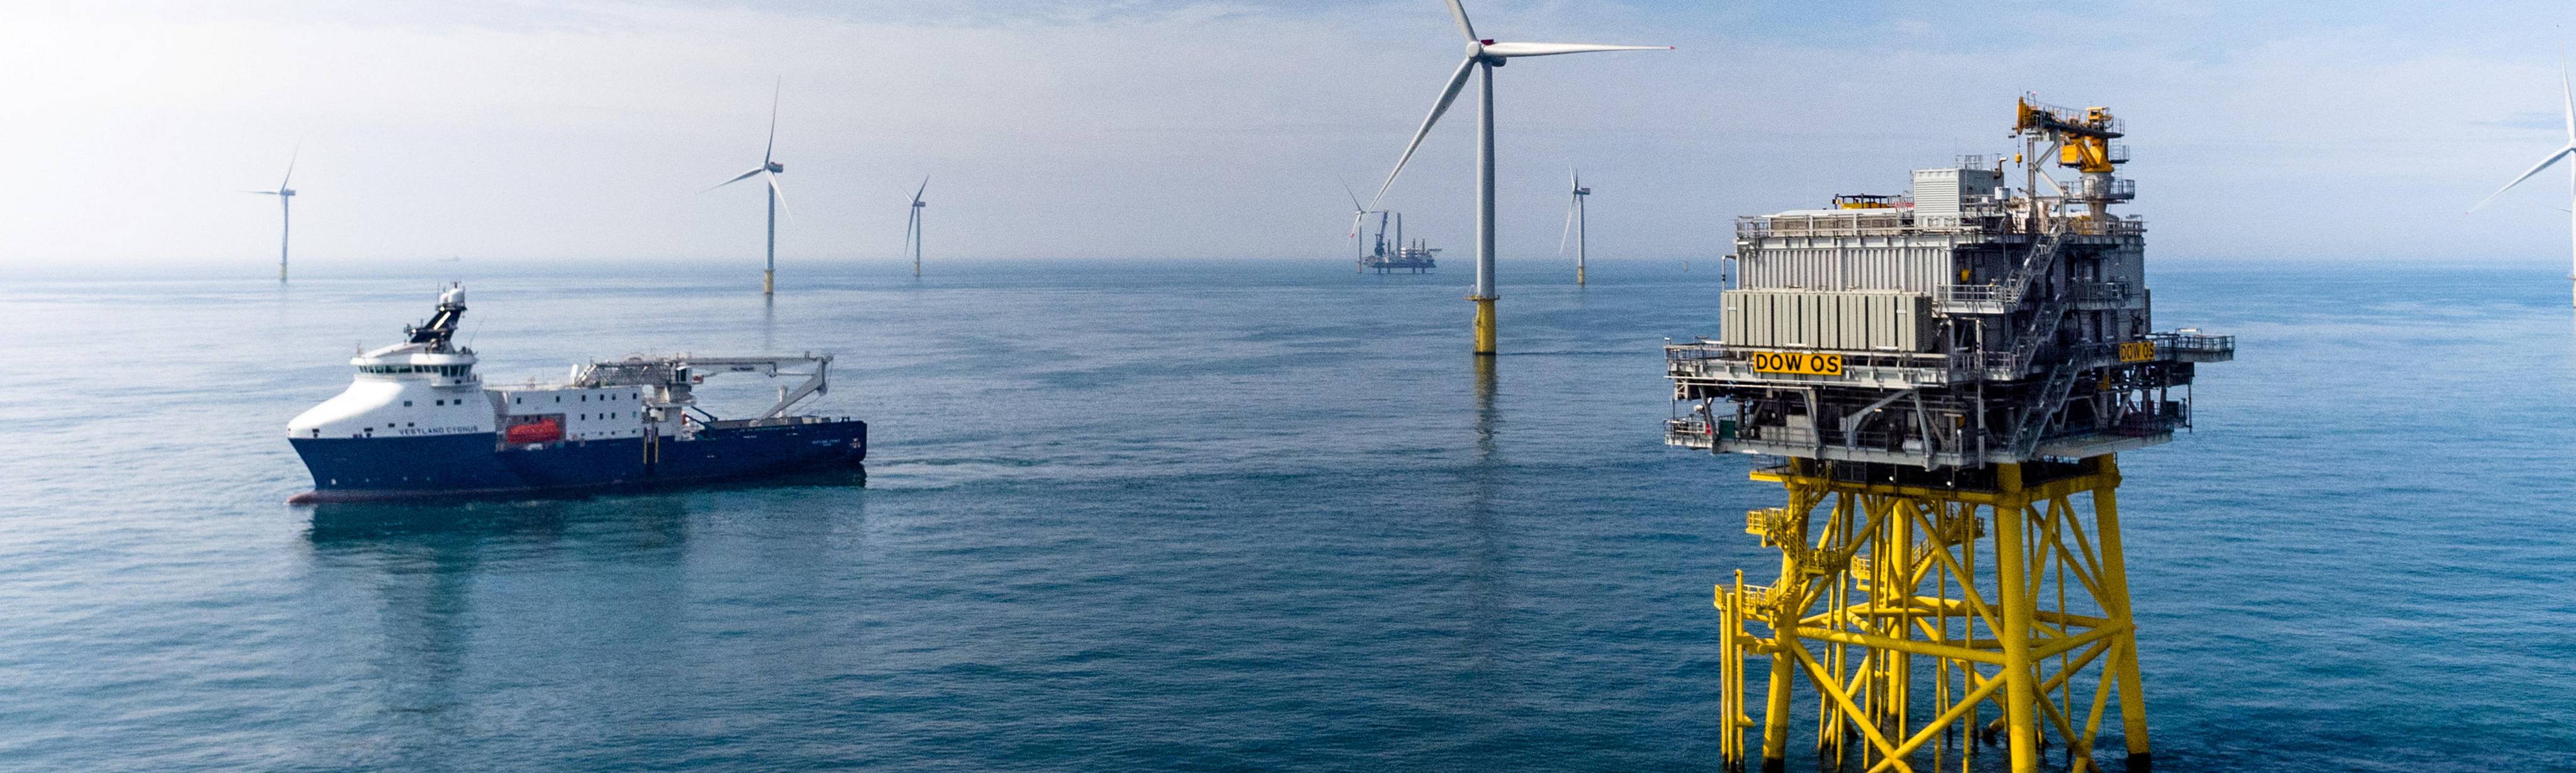 Dudgeon offshore wind farm, UK